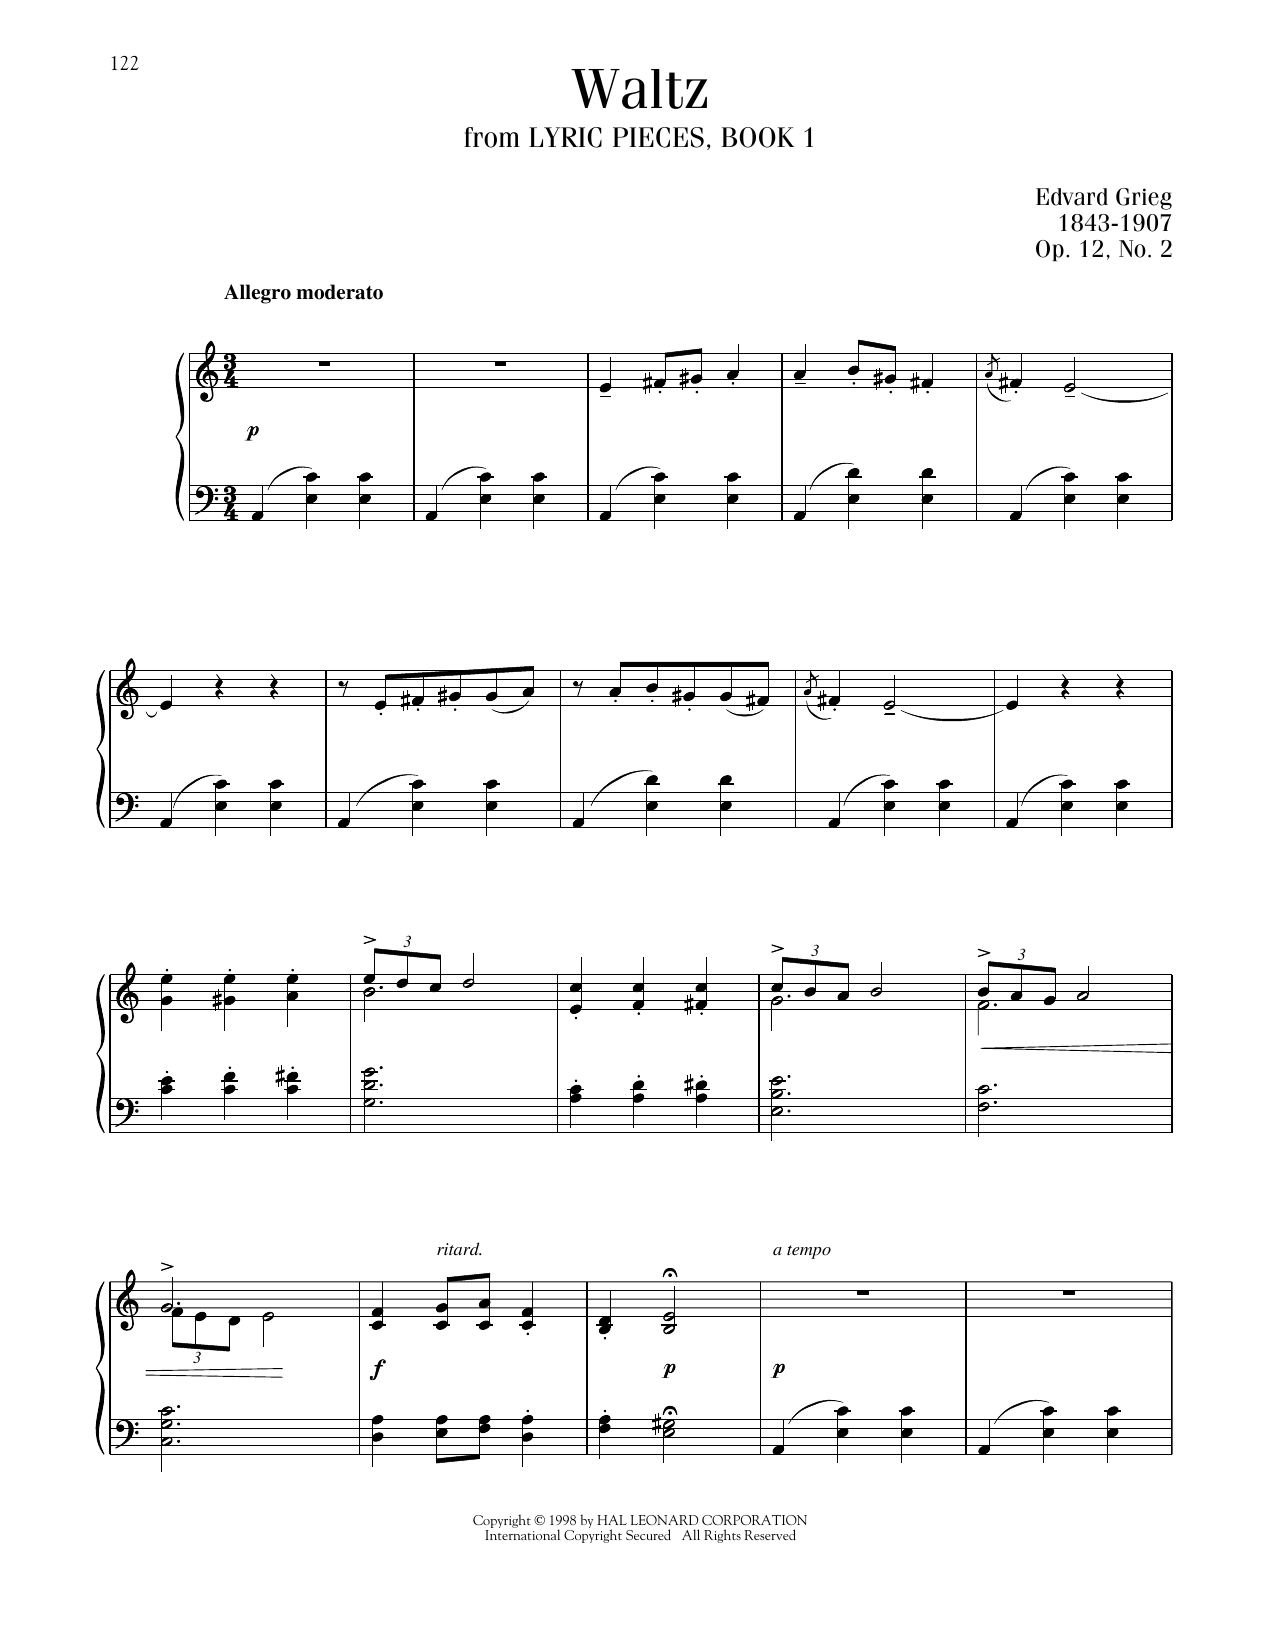 Edvard Grieg Waltz, Op. 12, No. 2 sheet music notes printable PDF score